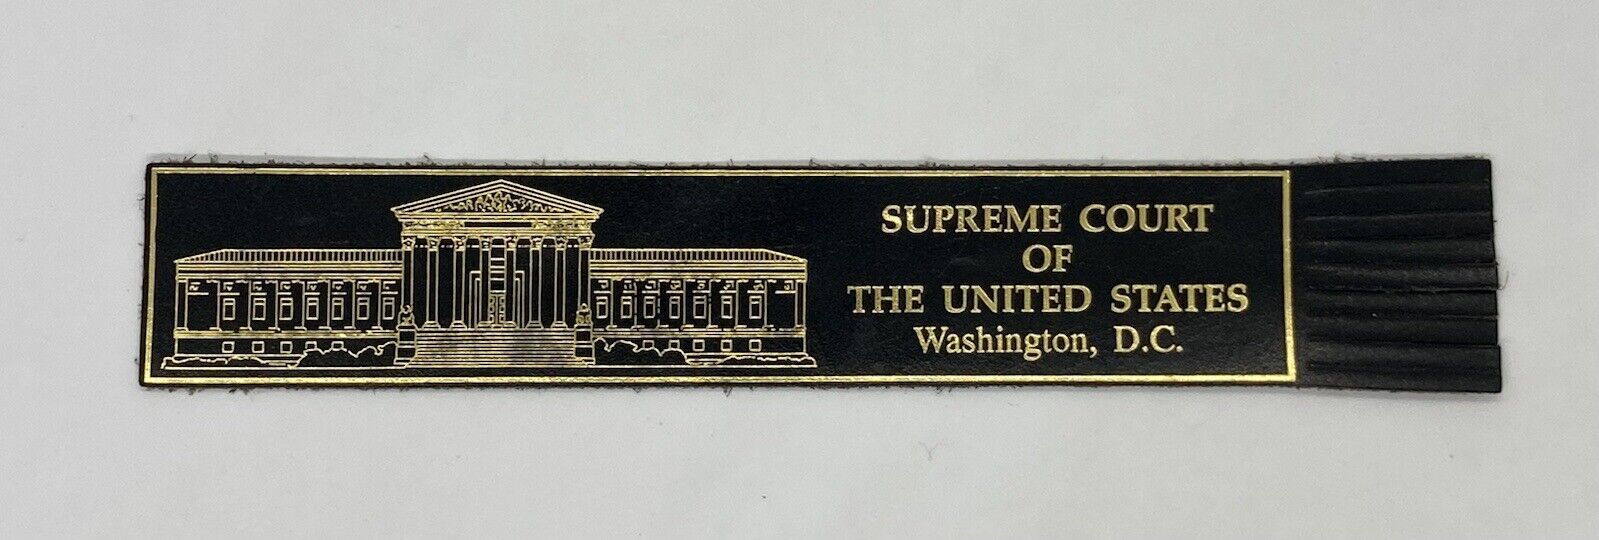 Vintage Supreme Court Of The United States Leather Bookmark Washington D.C 16